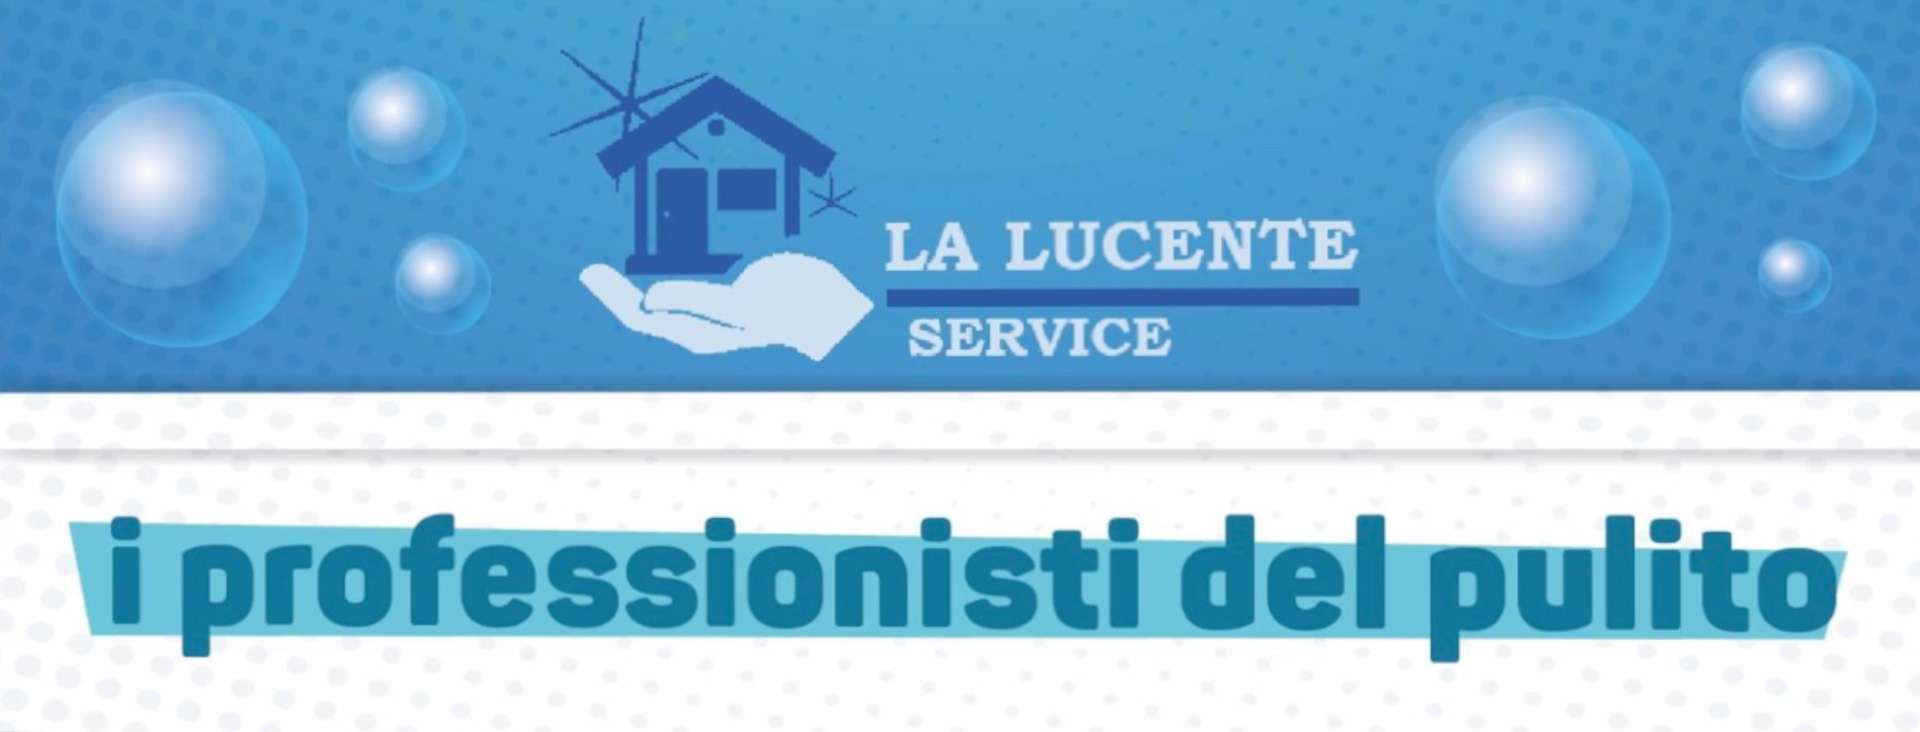 LA LUCENTE SERVICE S.A.S.